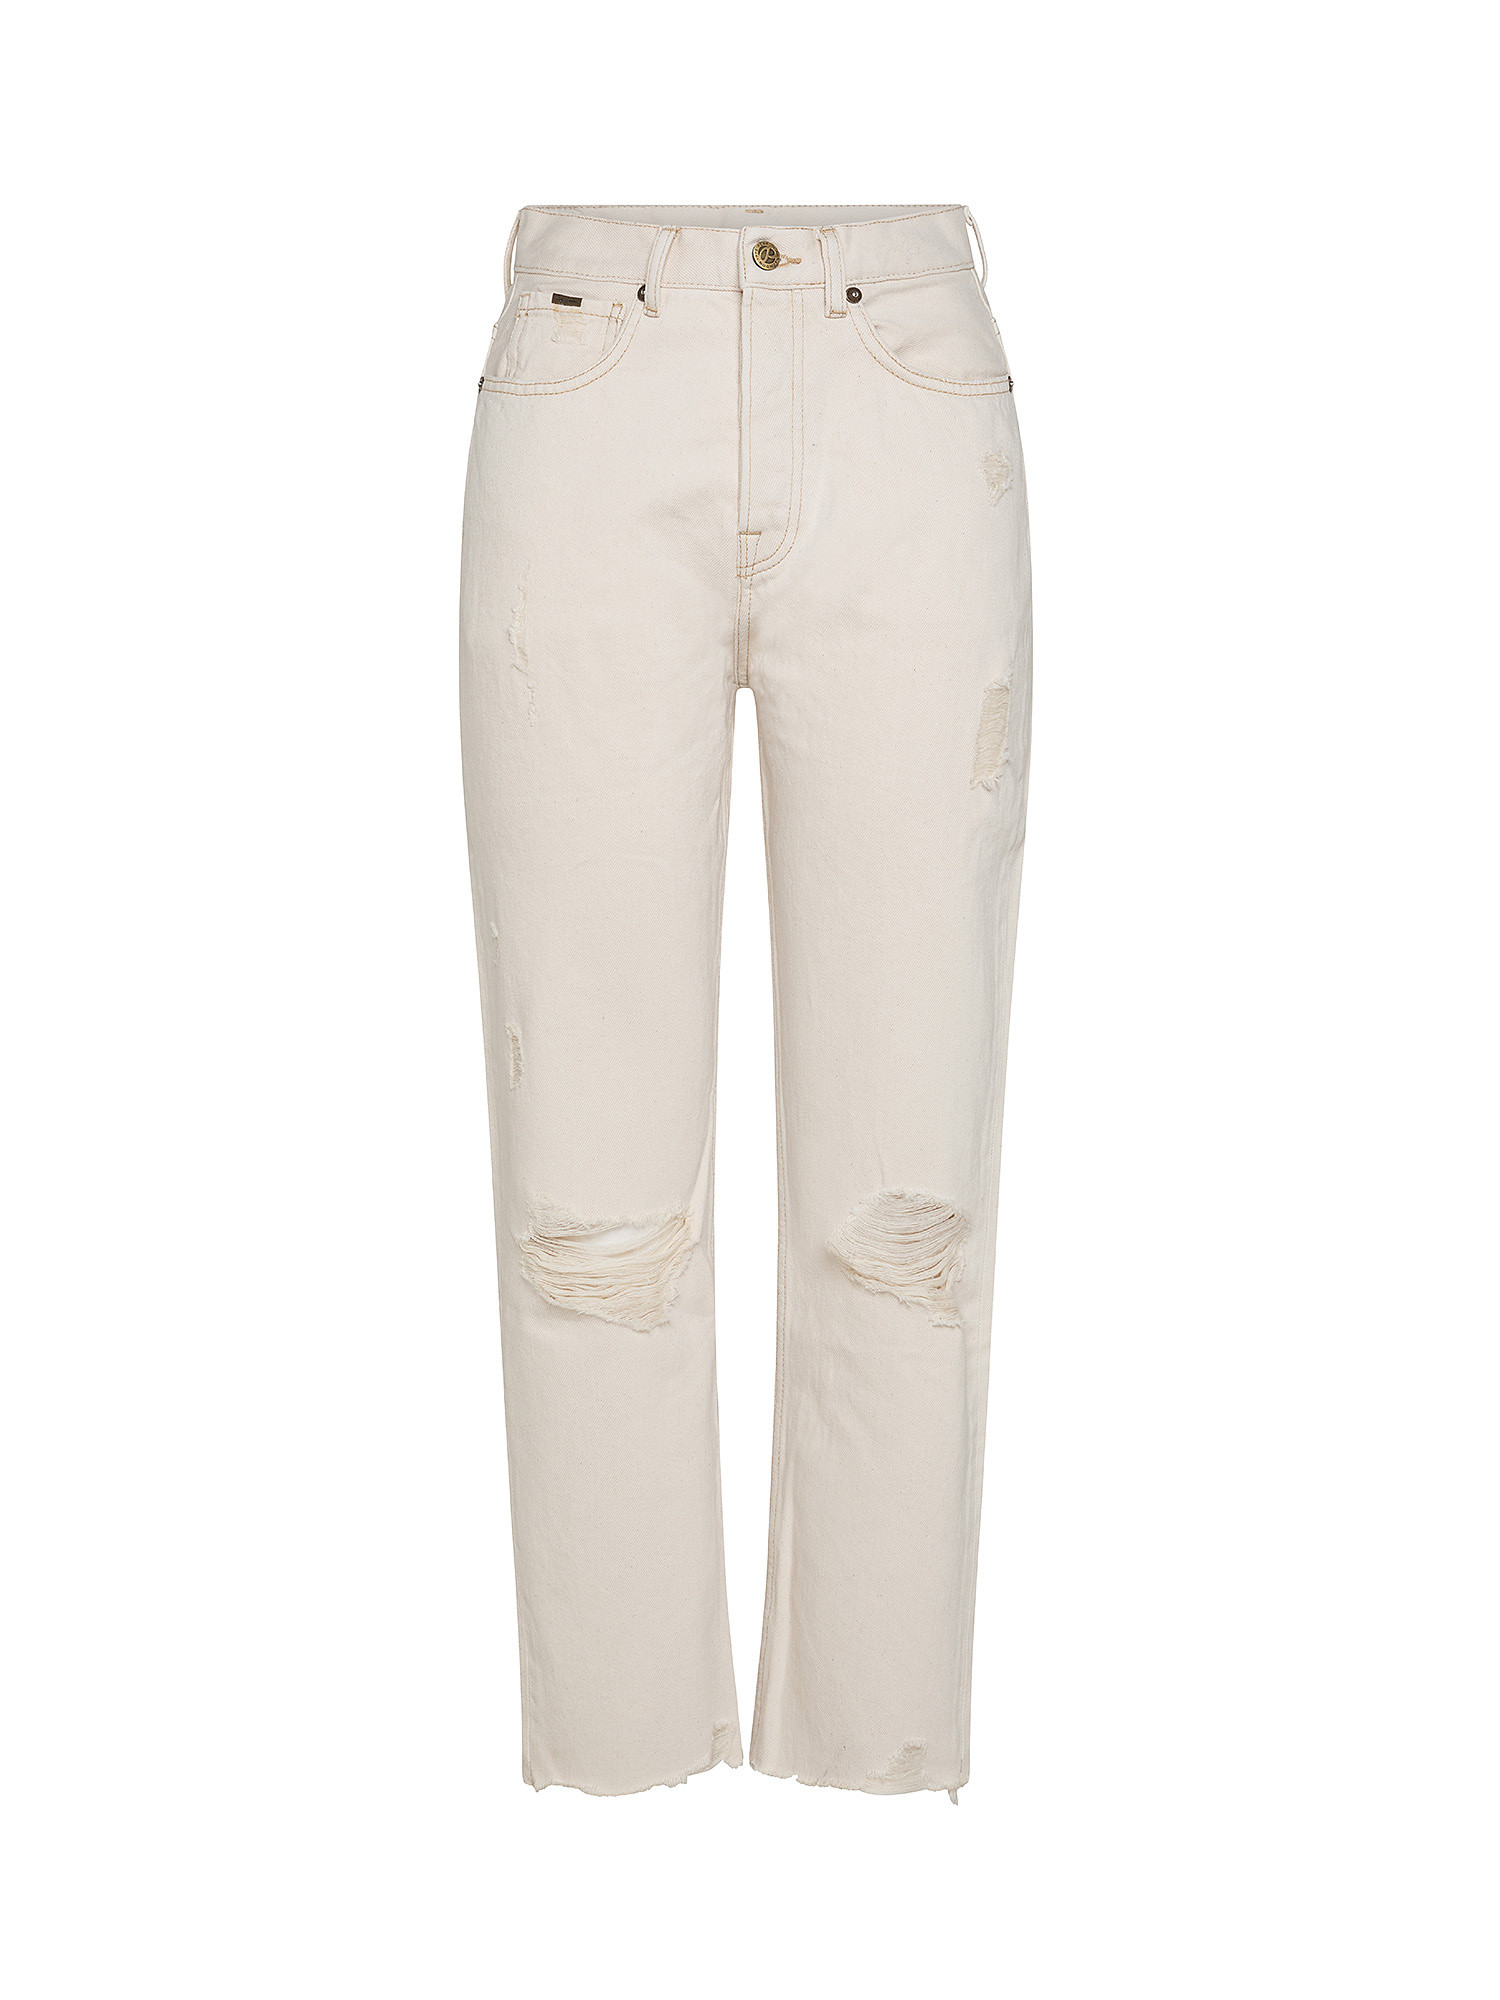 Jeans Celyn ecru, taglio straight a vita alta., Bianco sporco, large image number 0